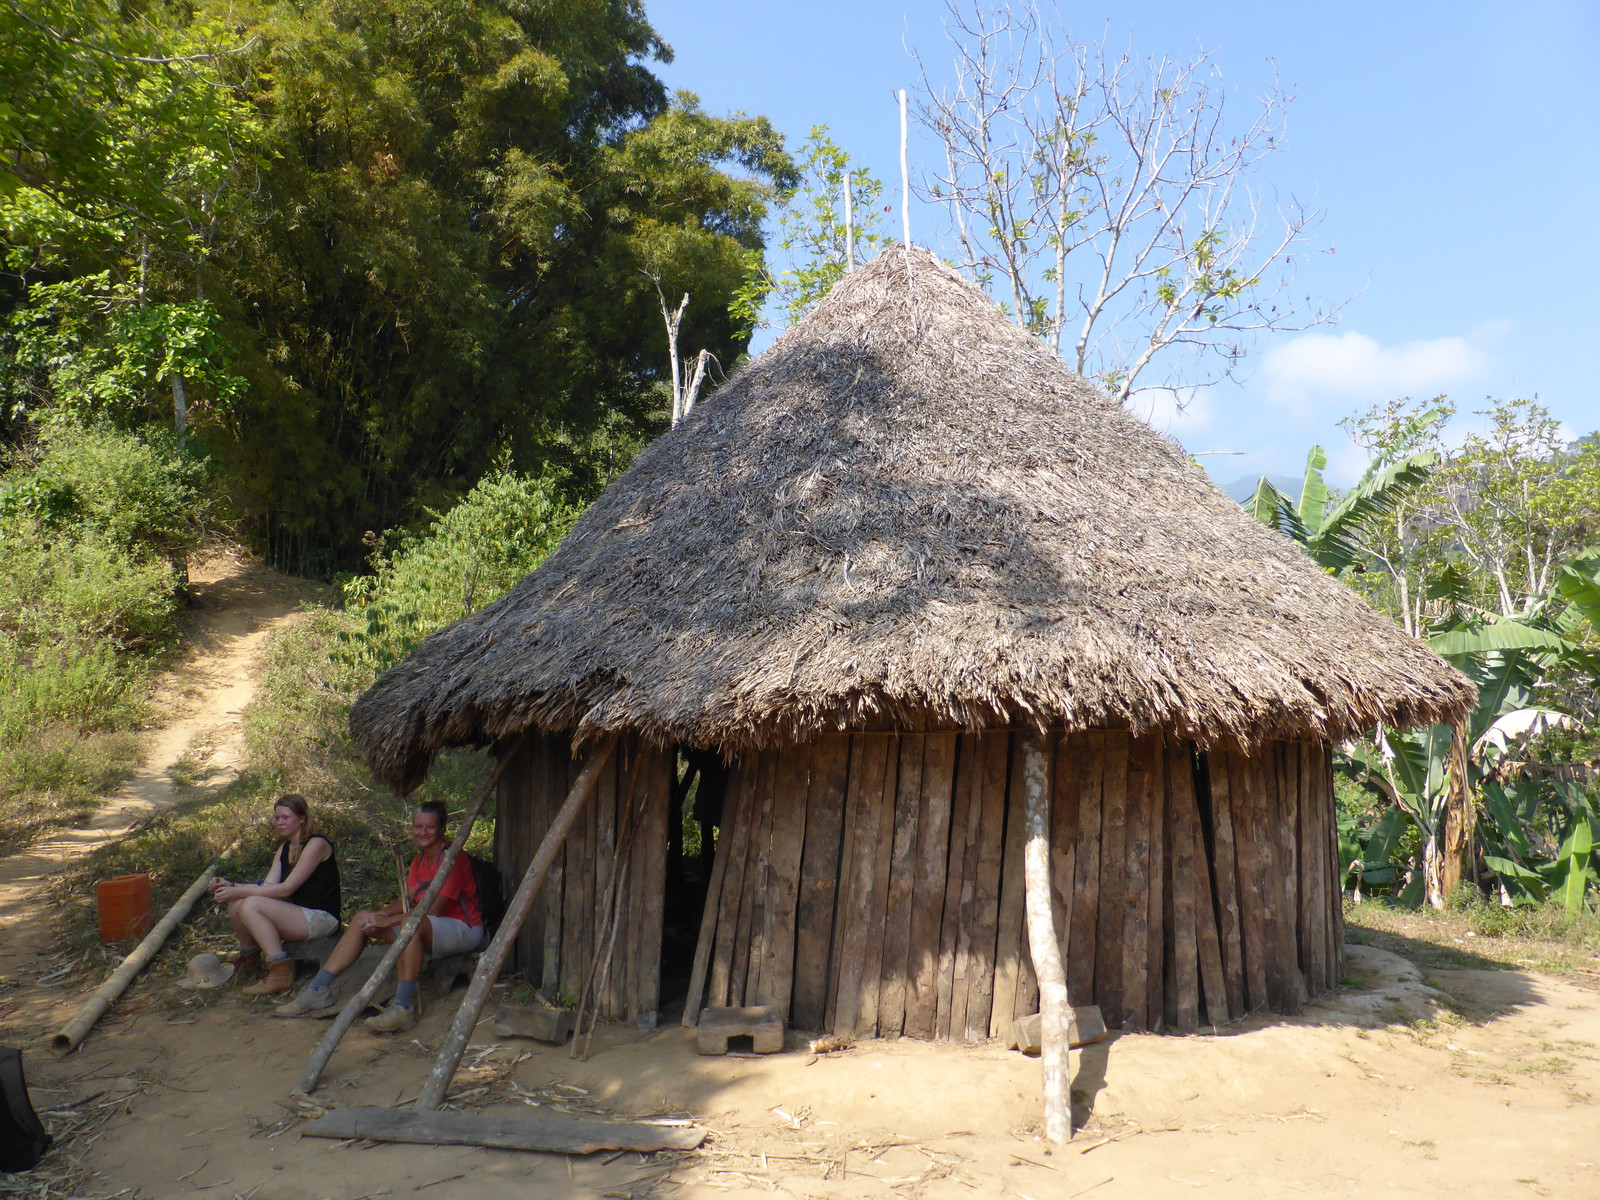 The Kogi hut where we found a sugar press